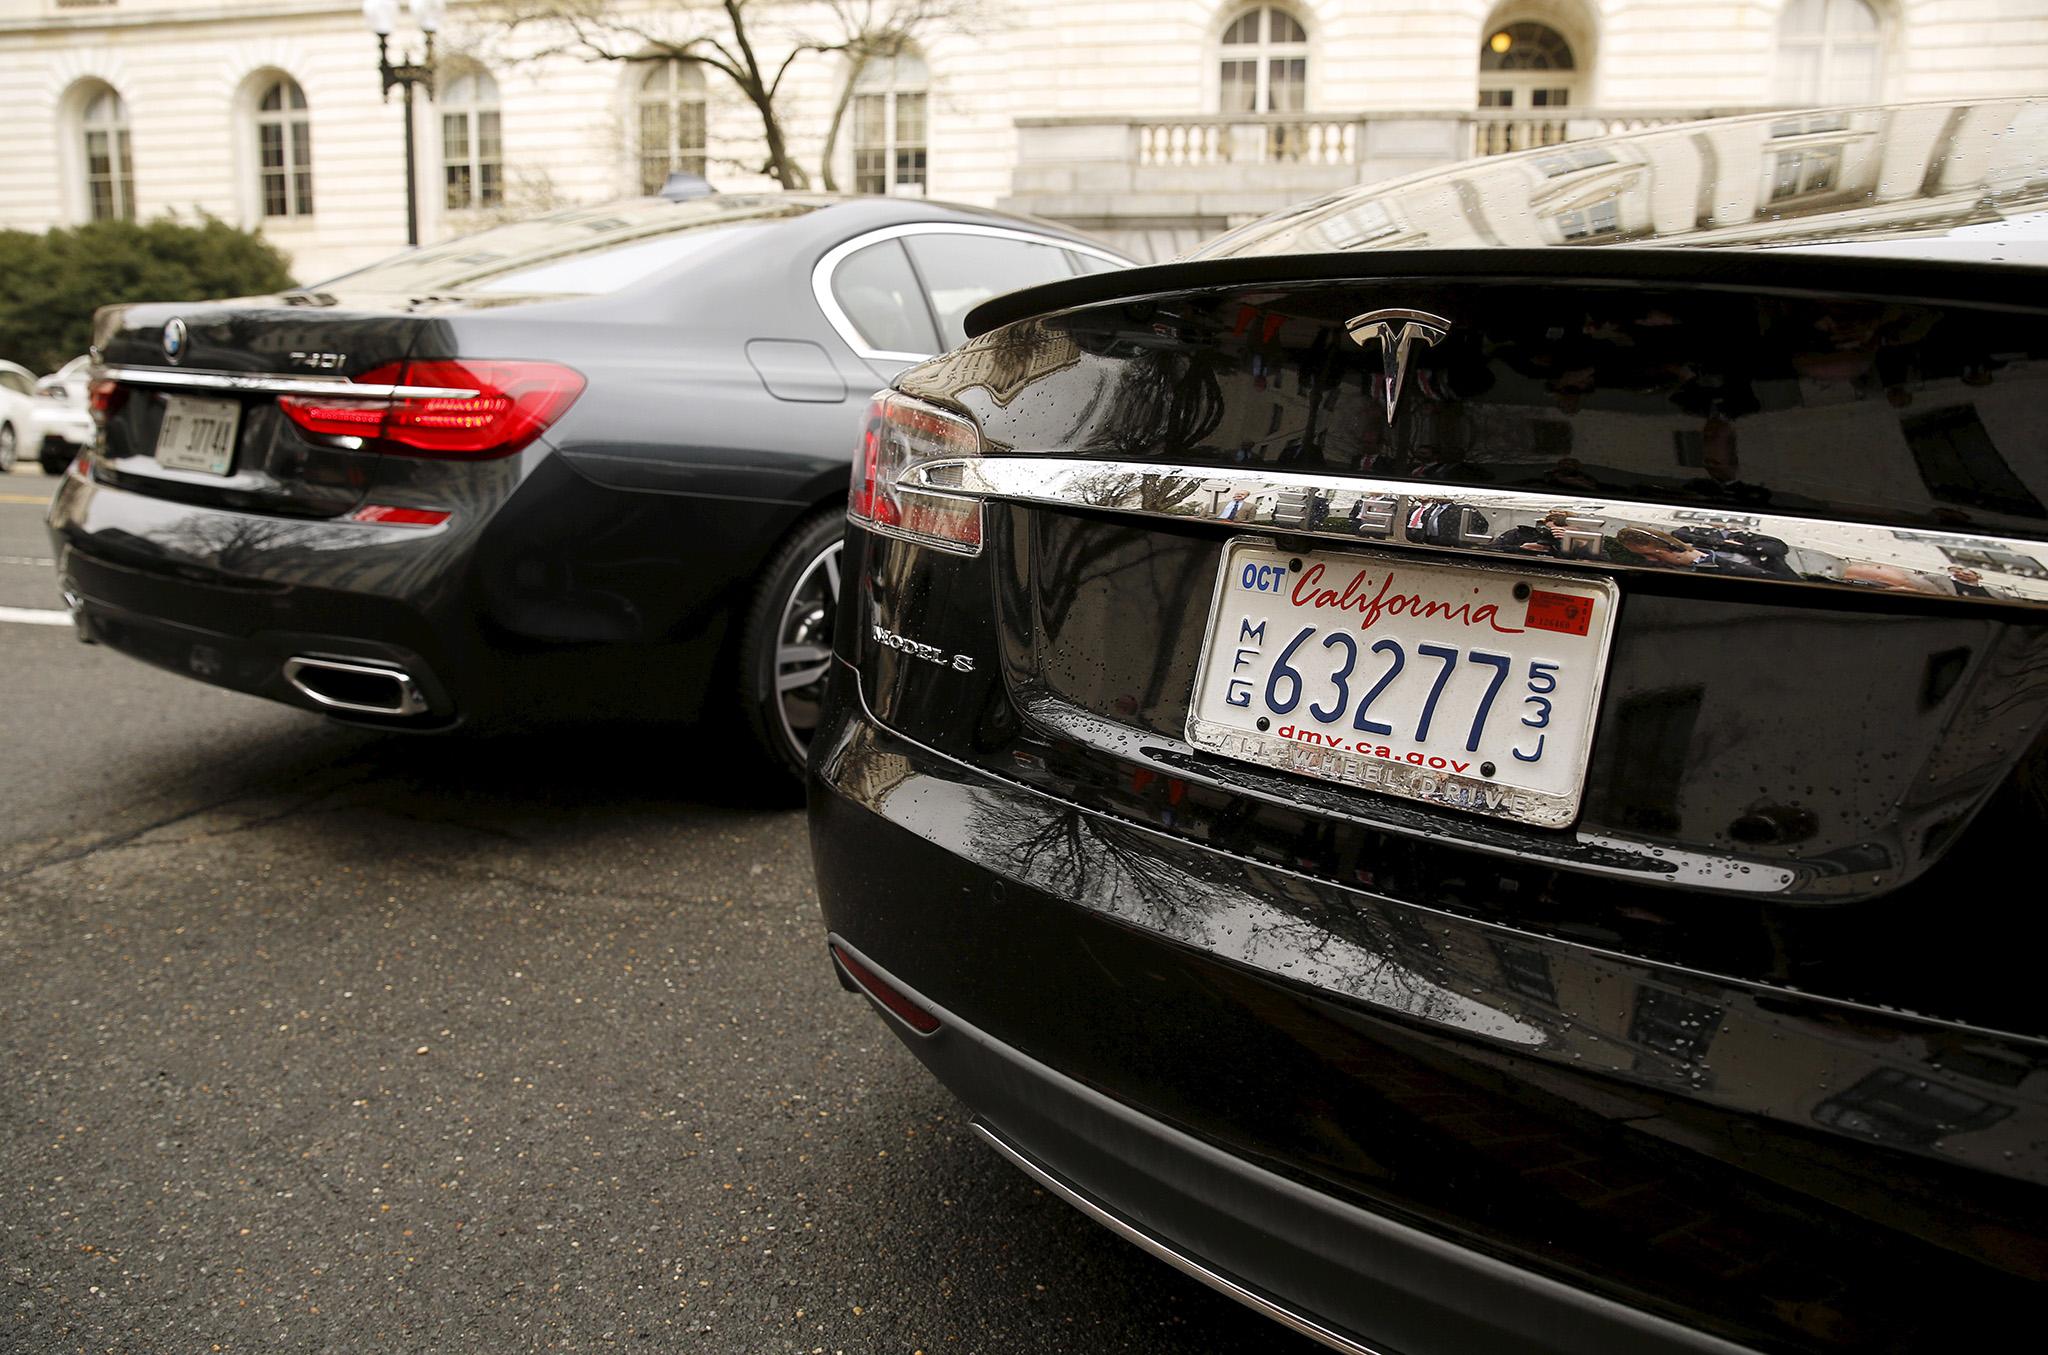 A BMW 740i is self-parked next to a Tesla S sedan via a remote control key. BMW wants to streamline engineers to